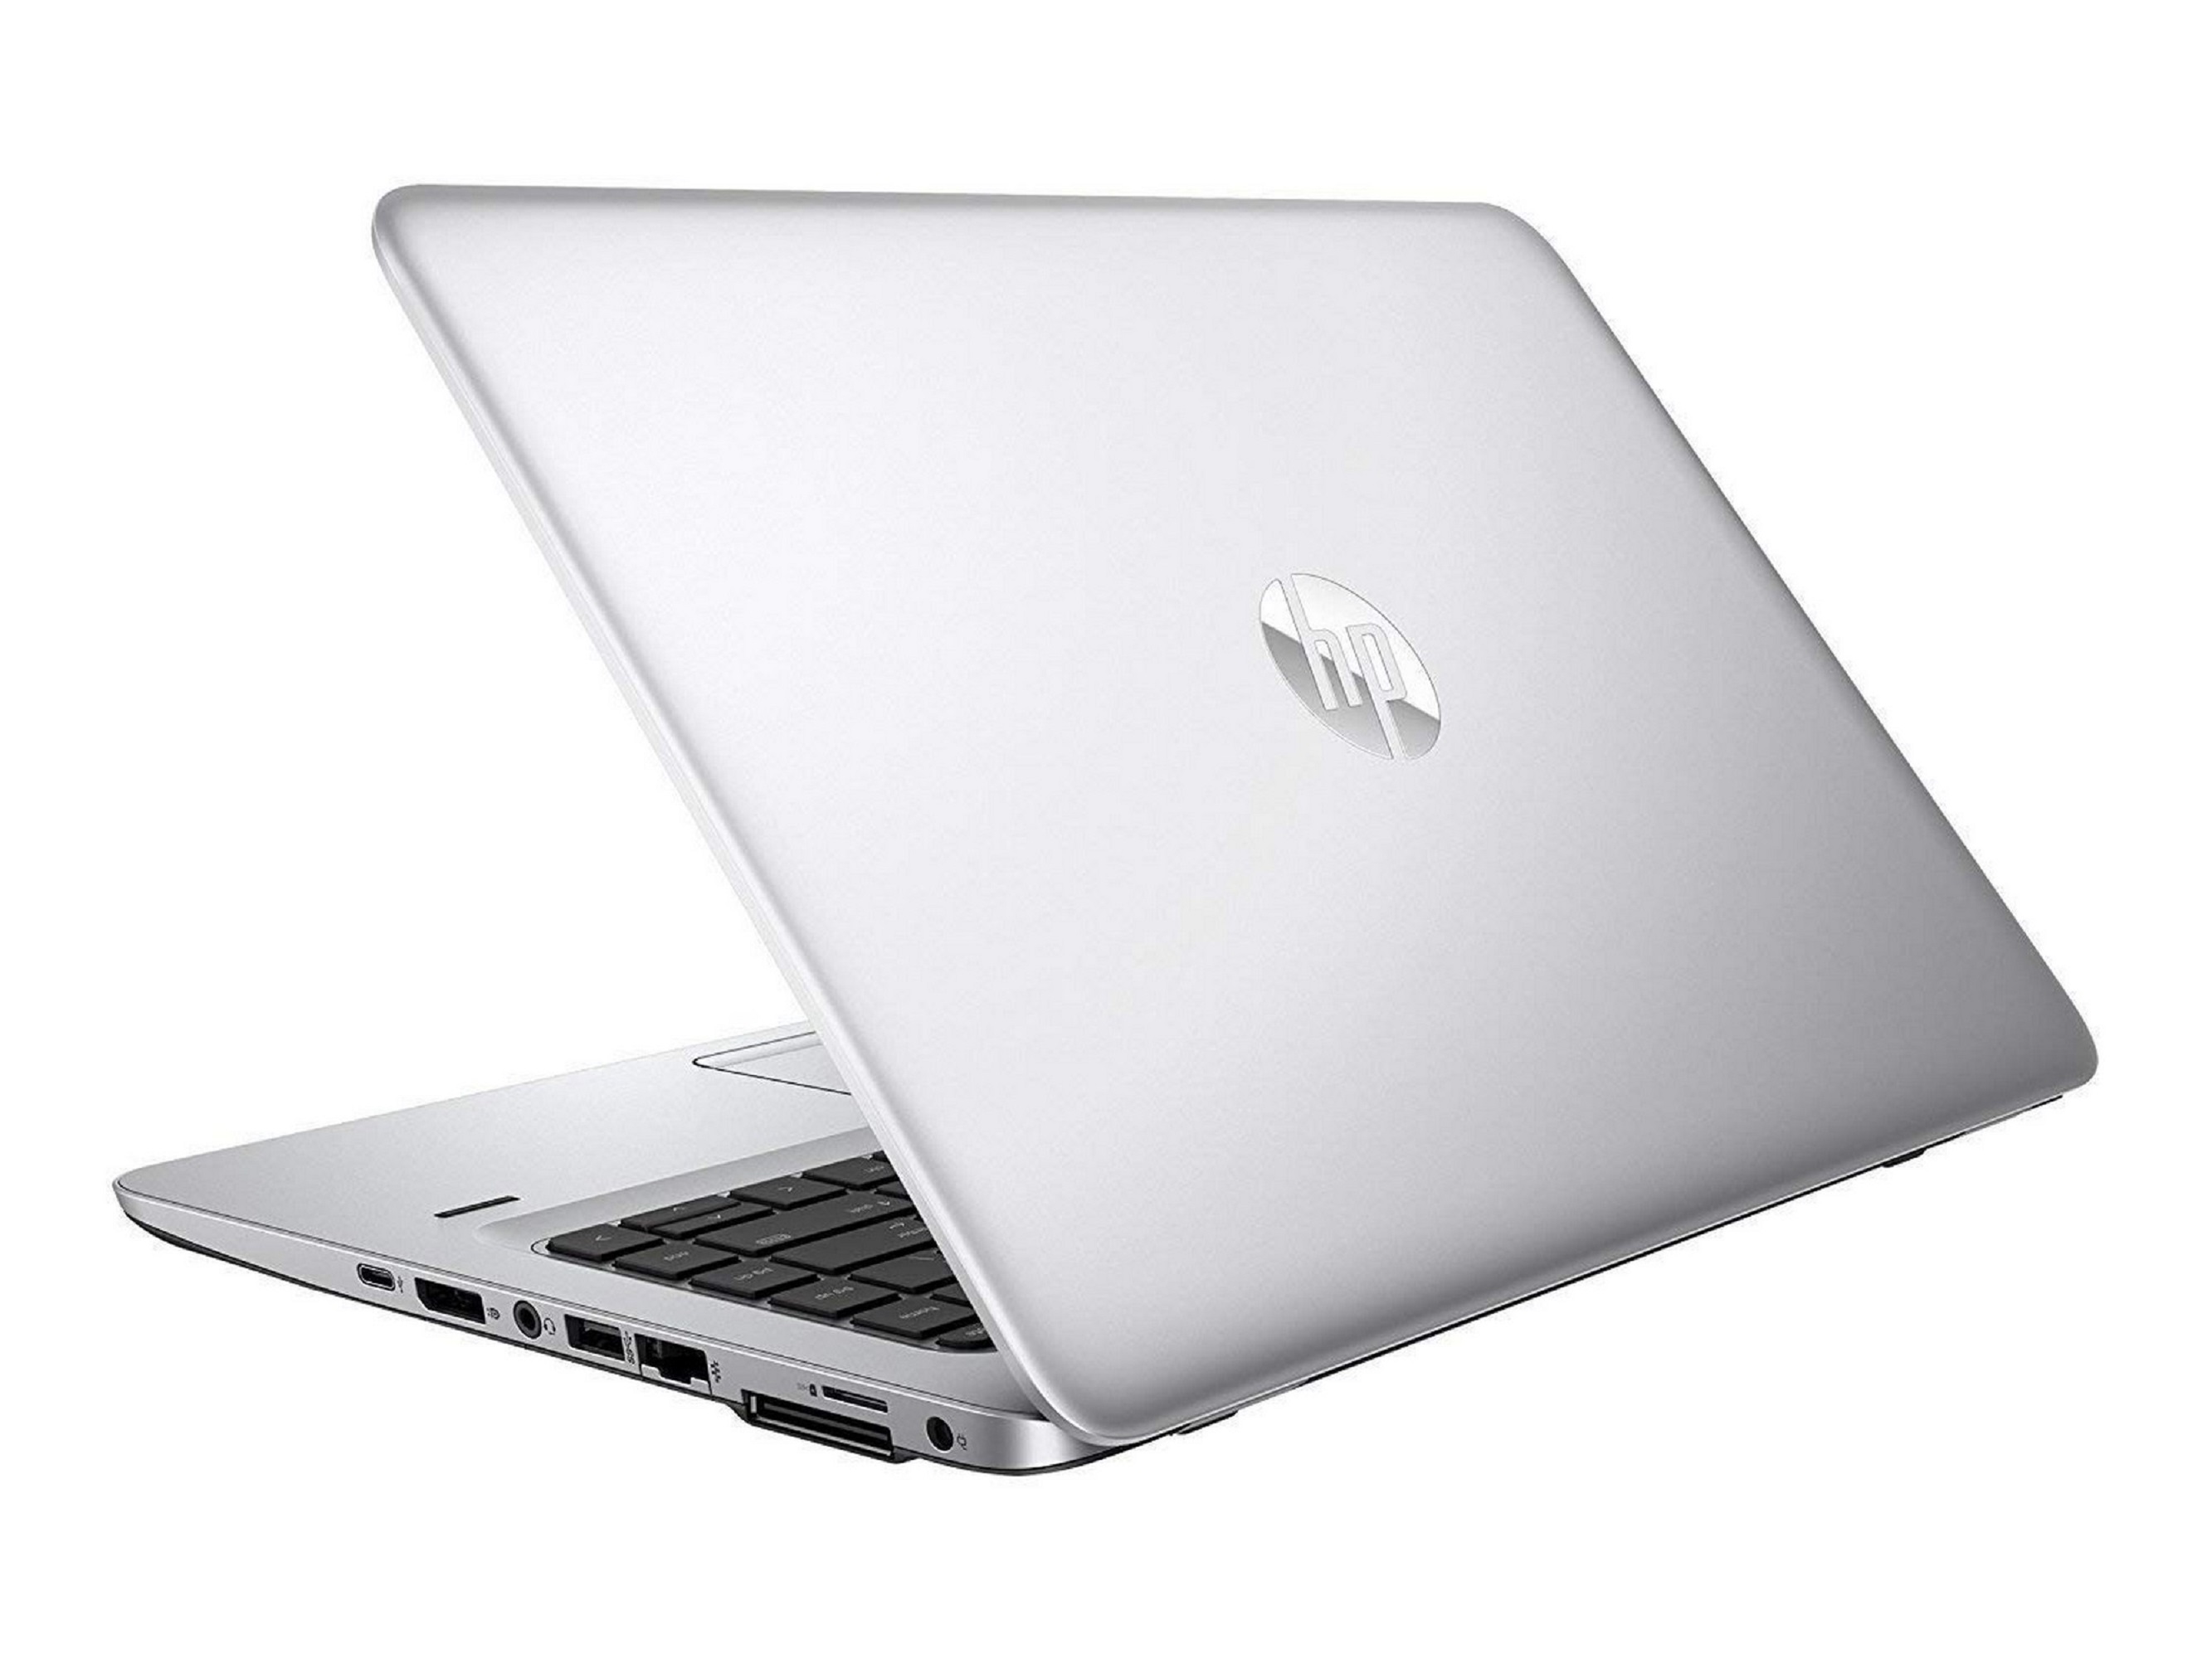 HP EliteBook 840G3 14" Laptop, 2.6GHz Intel i7 Dual Core Gen 6, 16GB RAM, 512GB SSD, Windows 10 Home 64 Bit (Refurbished Grade B)